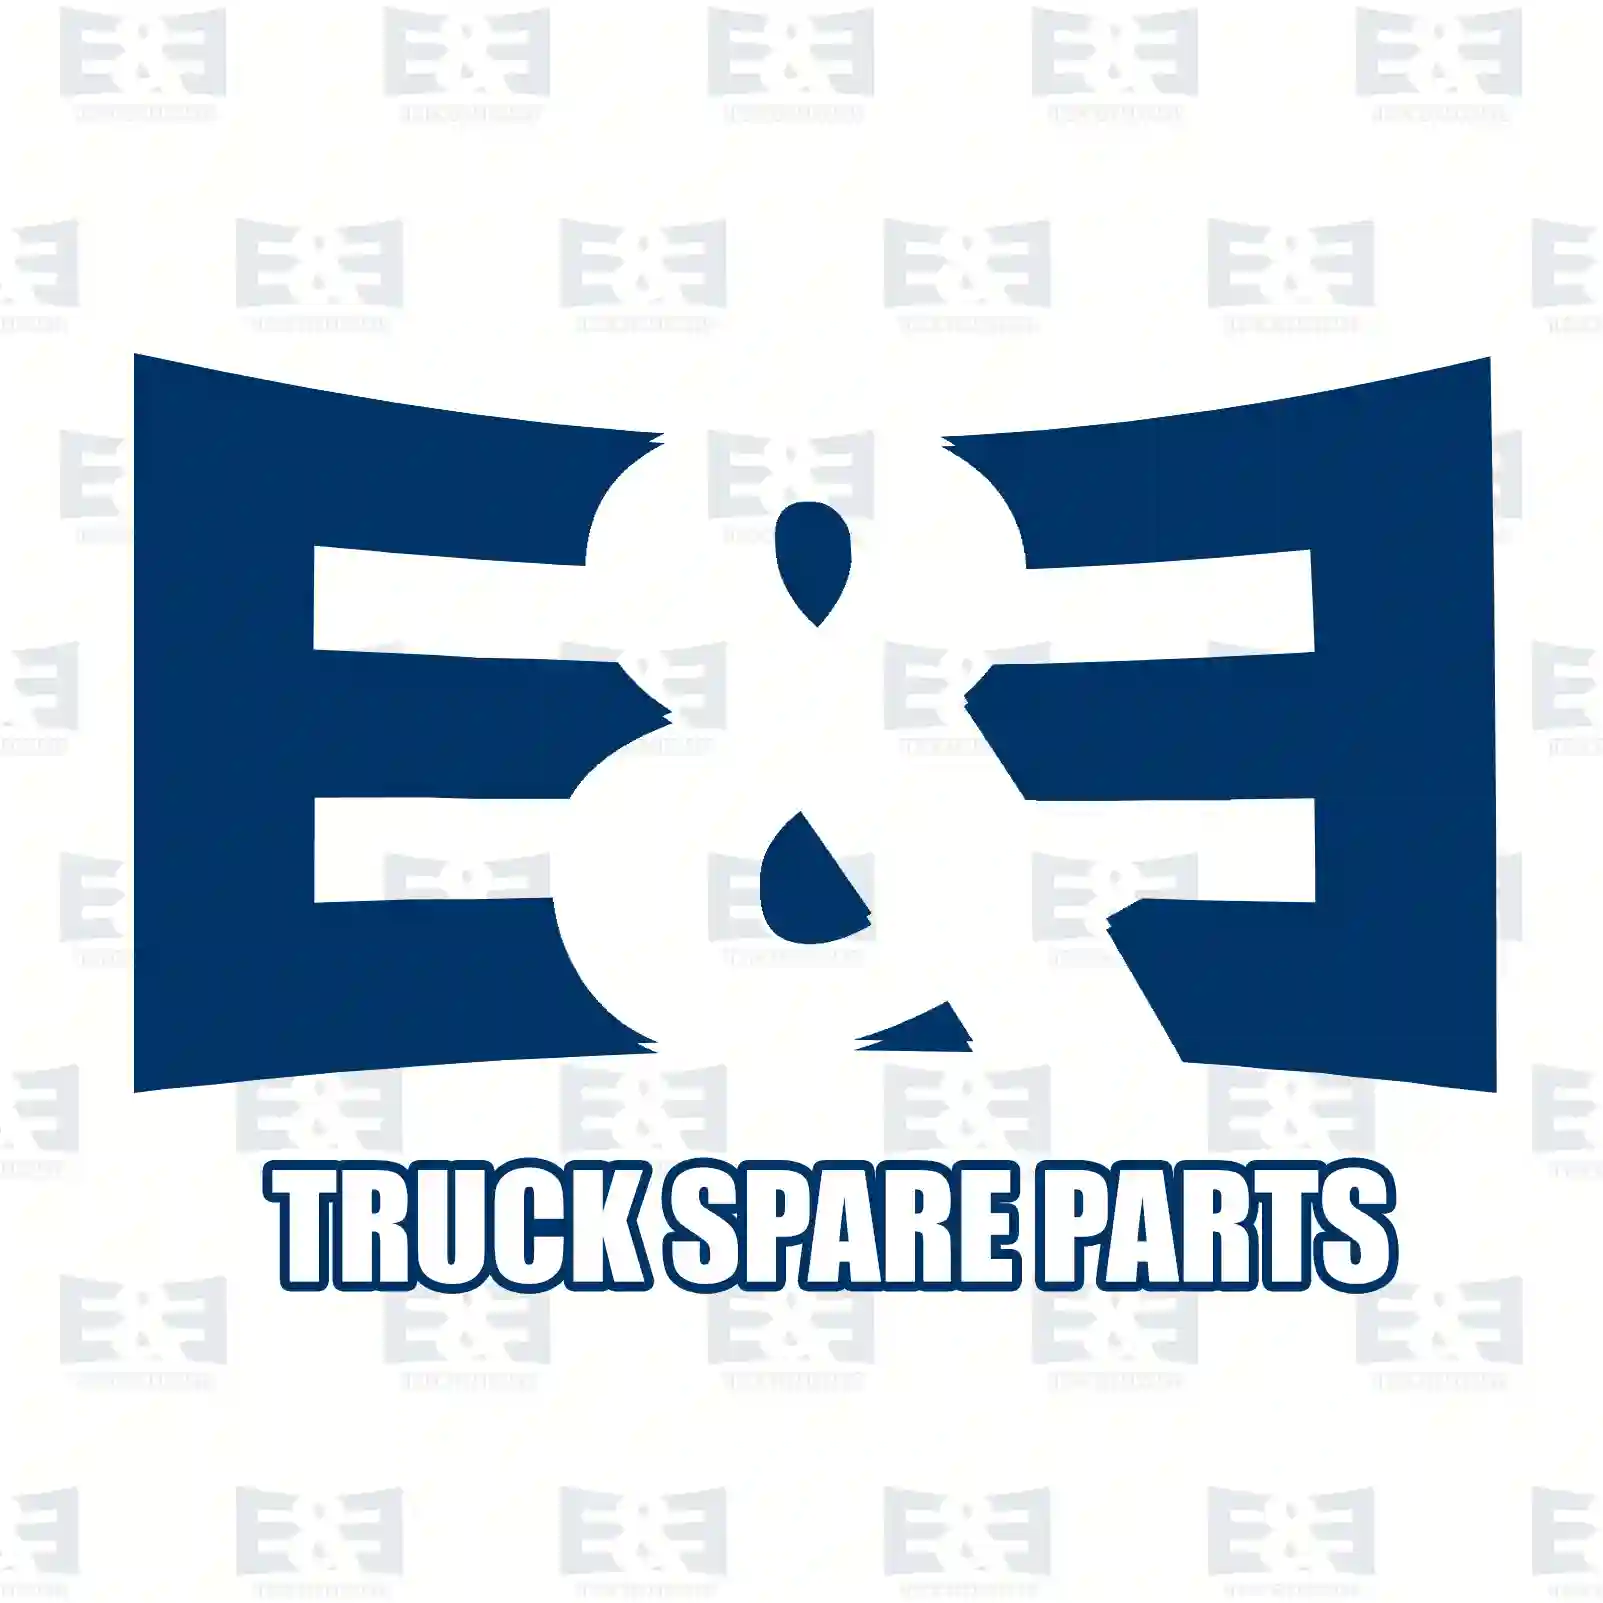 Suspension Buffer stop, EE No 2E2283481 ,  oem no:41214533 E&E Truck Spare Parts | Truck Spare Parts, Auotomotive Spare Parts